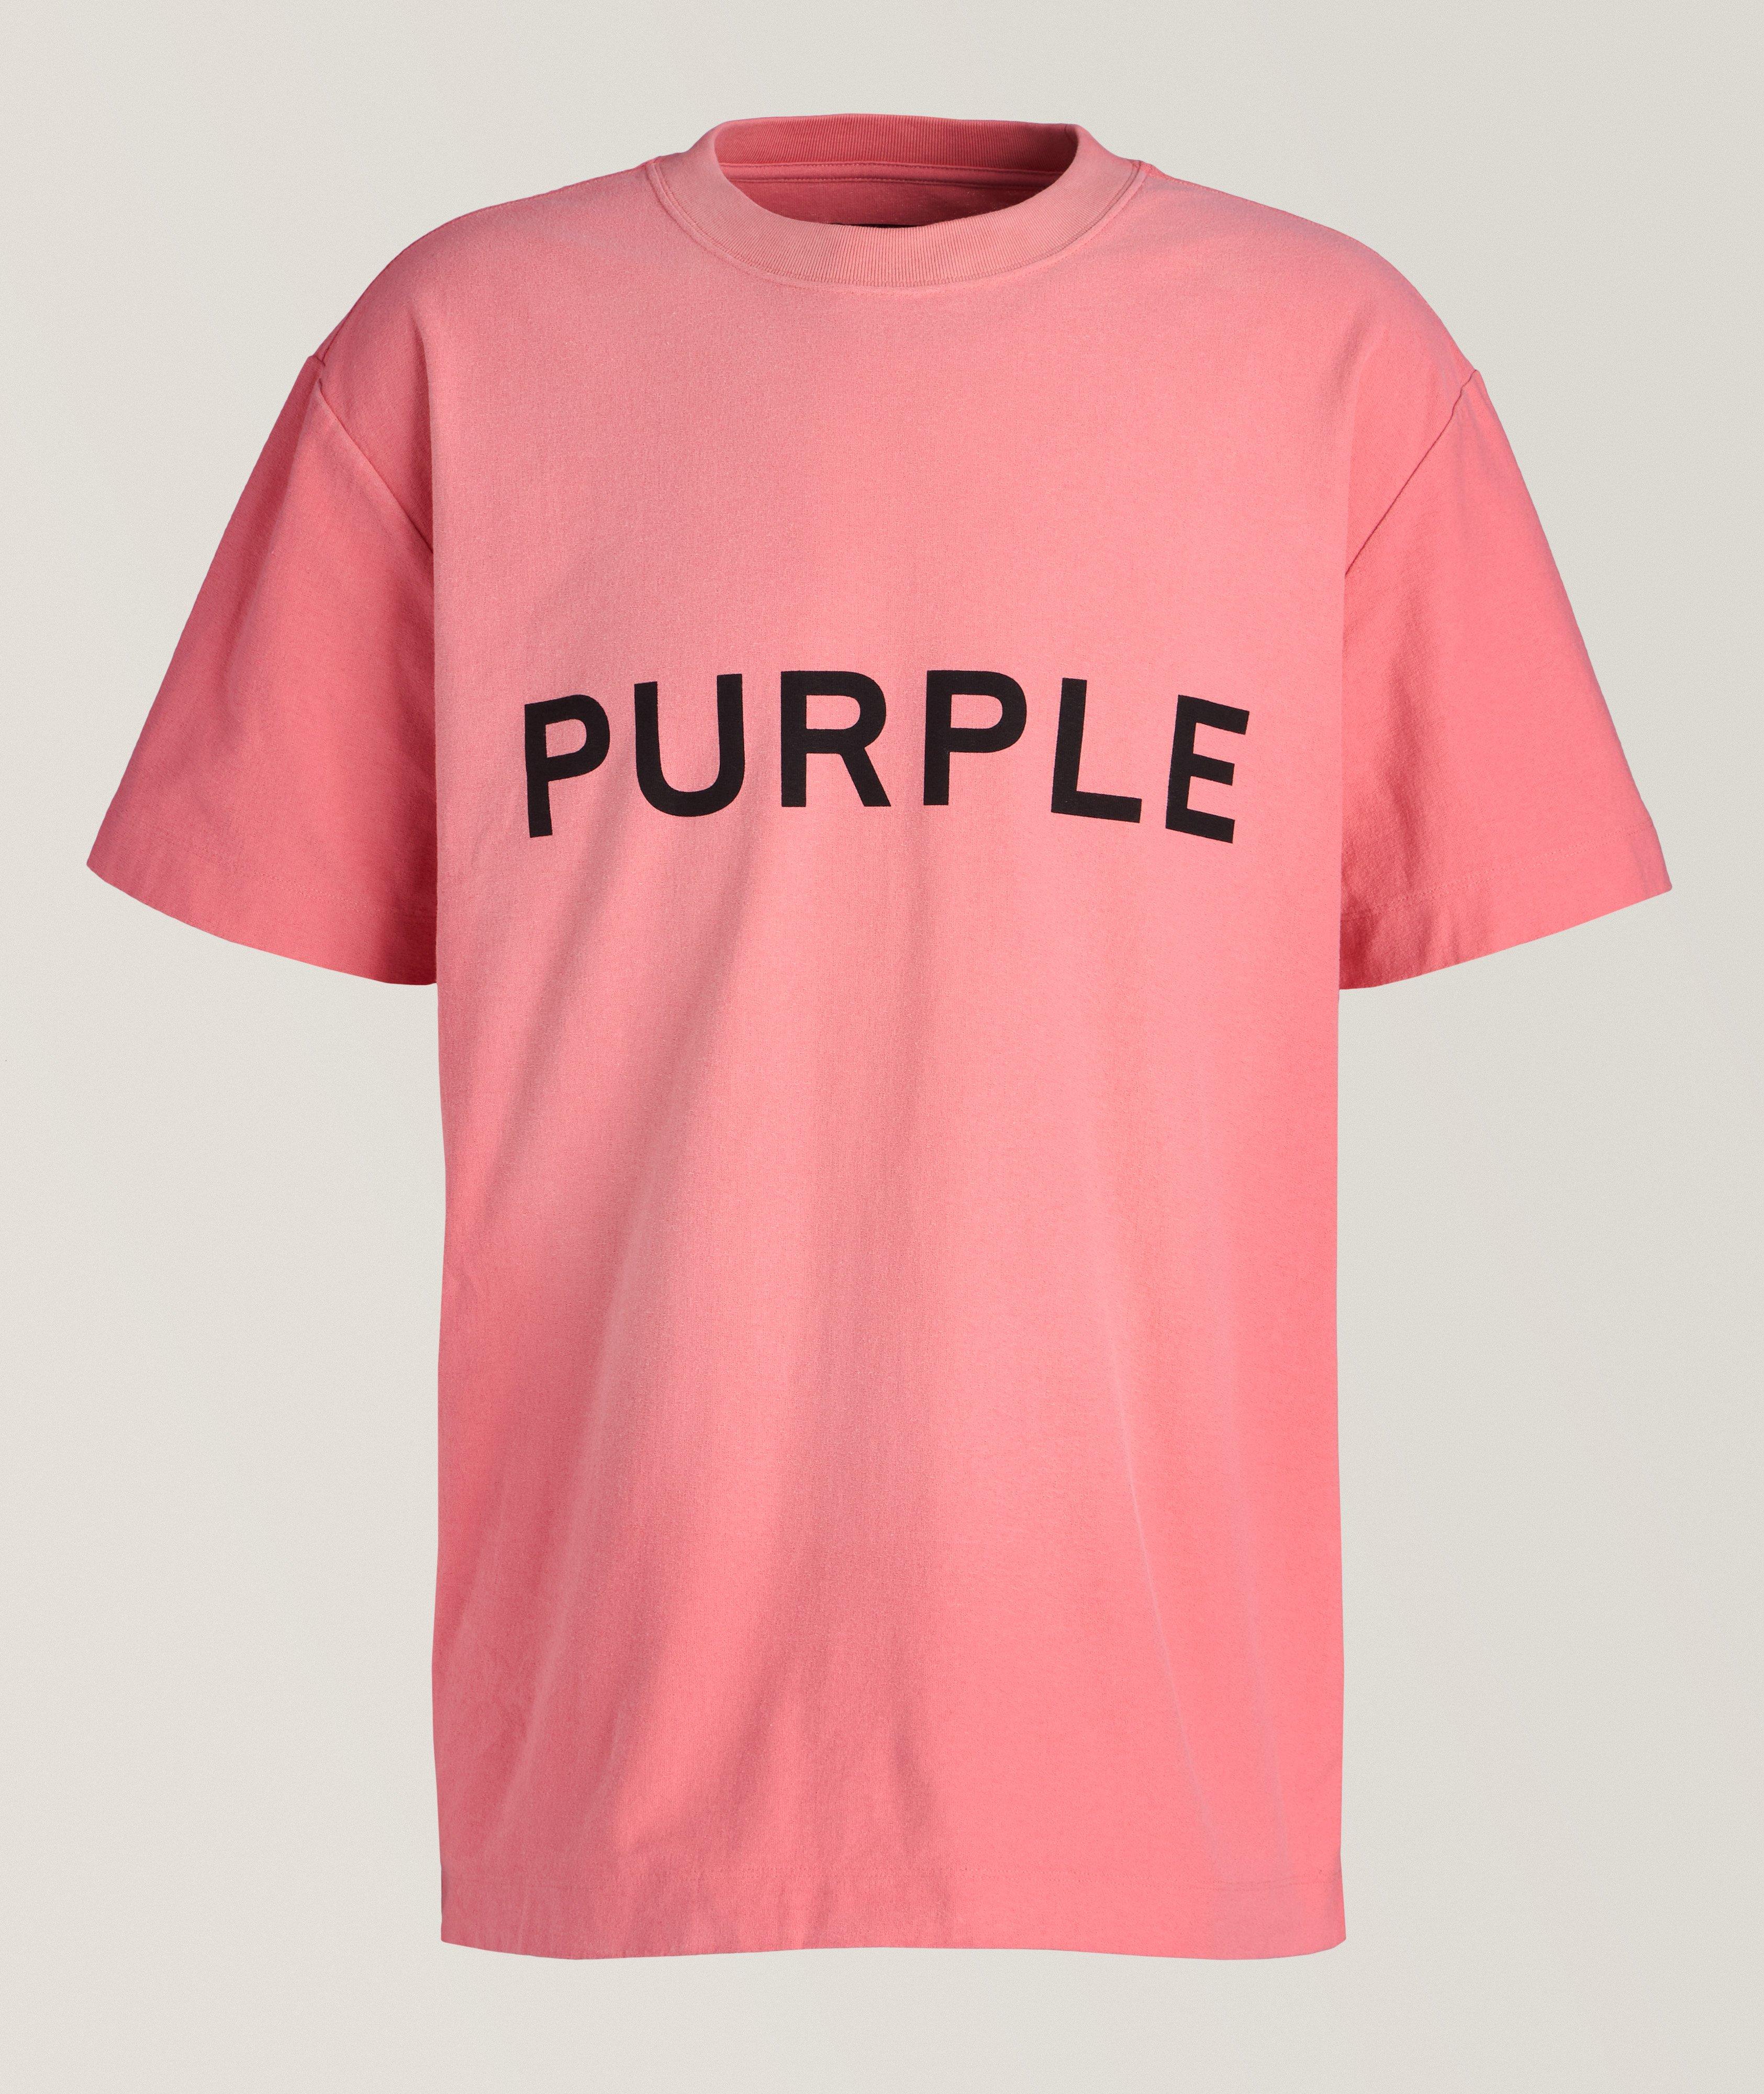 Textured Wordmark Cotton T-Shirt  image 0